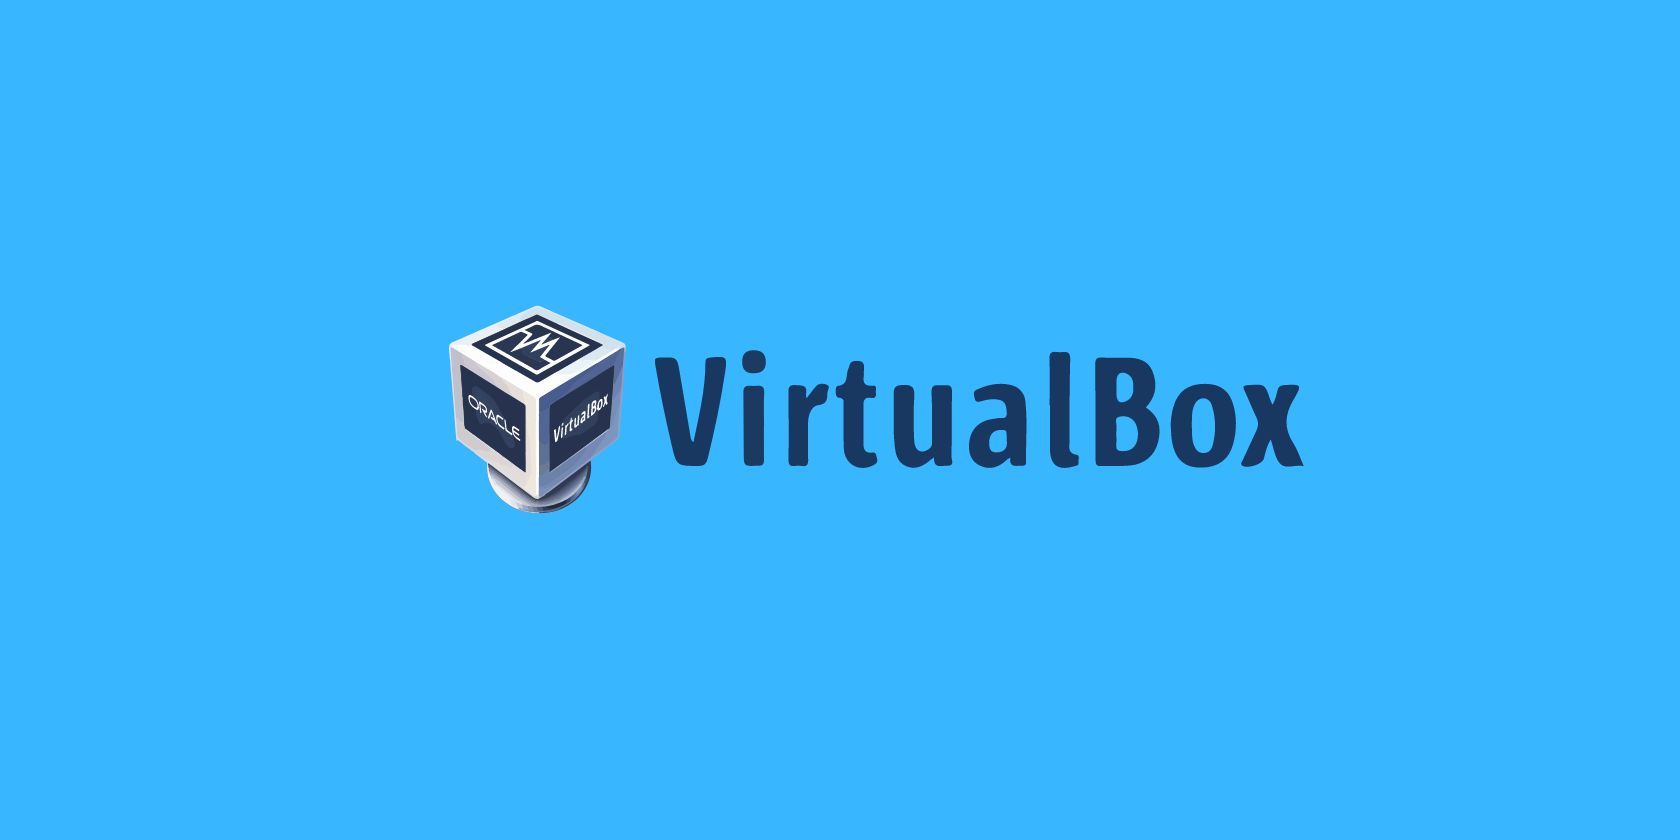 Er VirtualBox trygg?